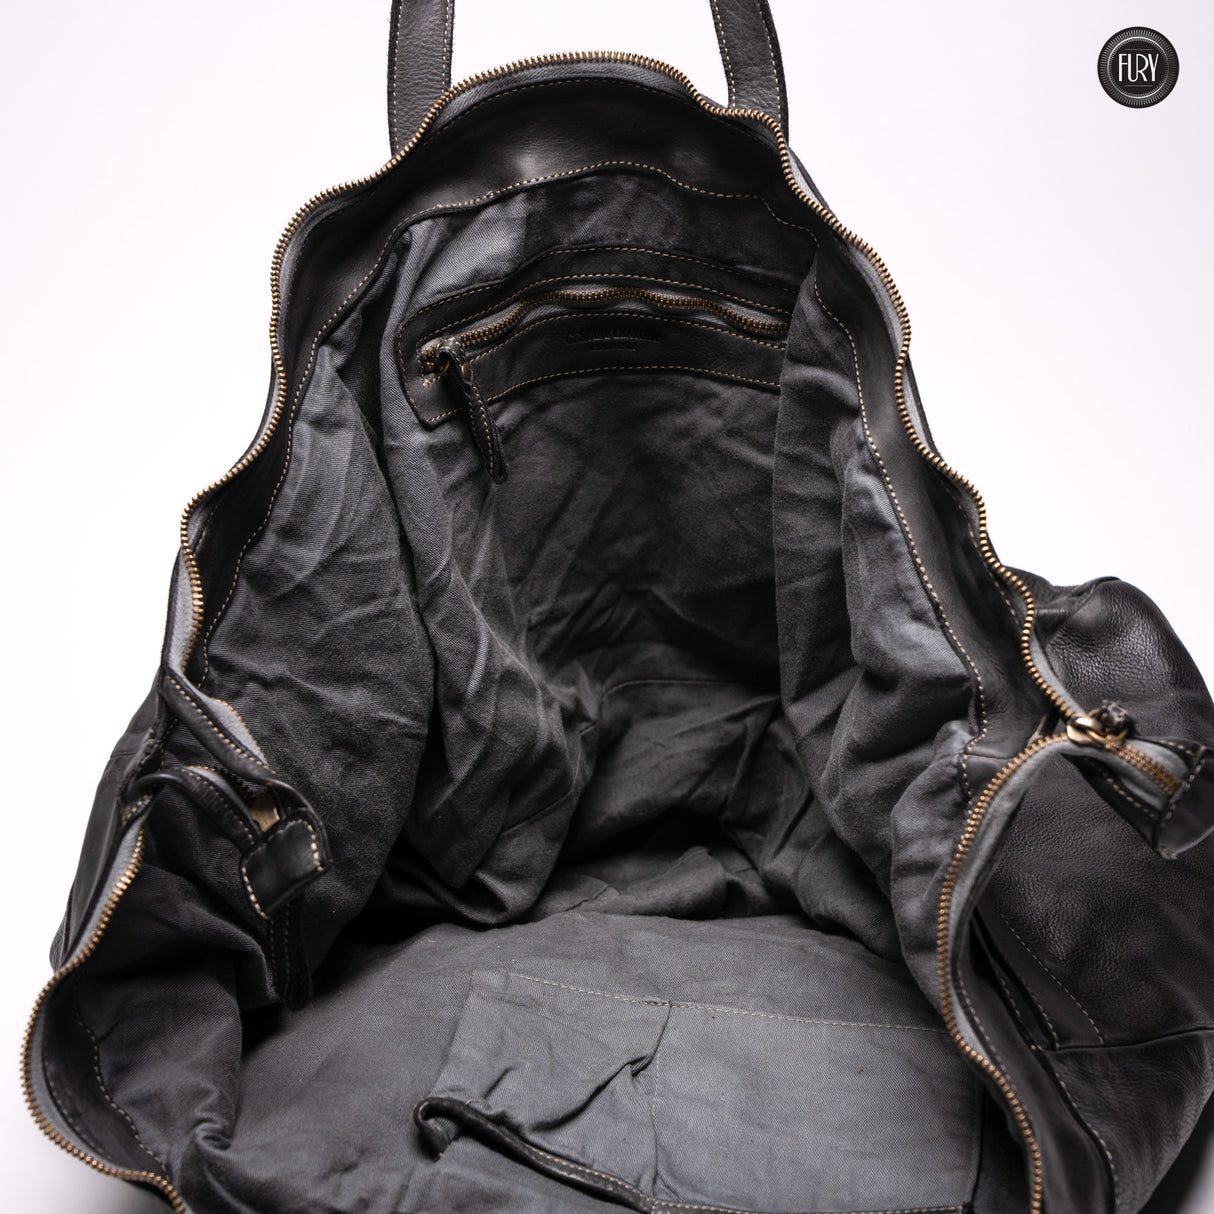 Dante leather bag